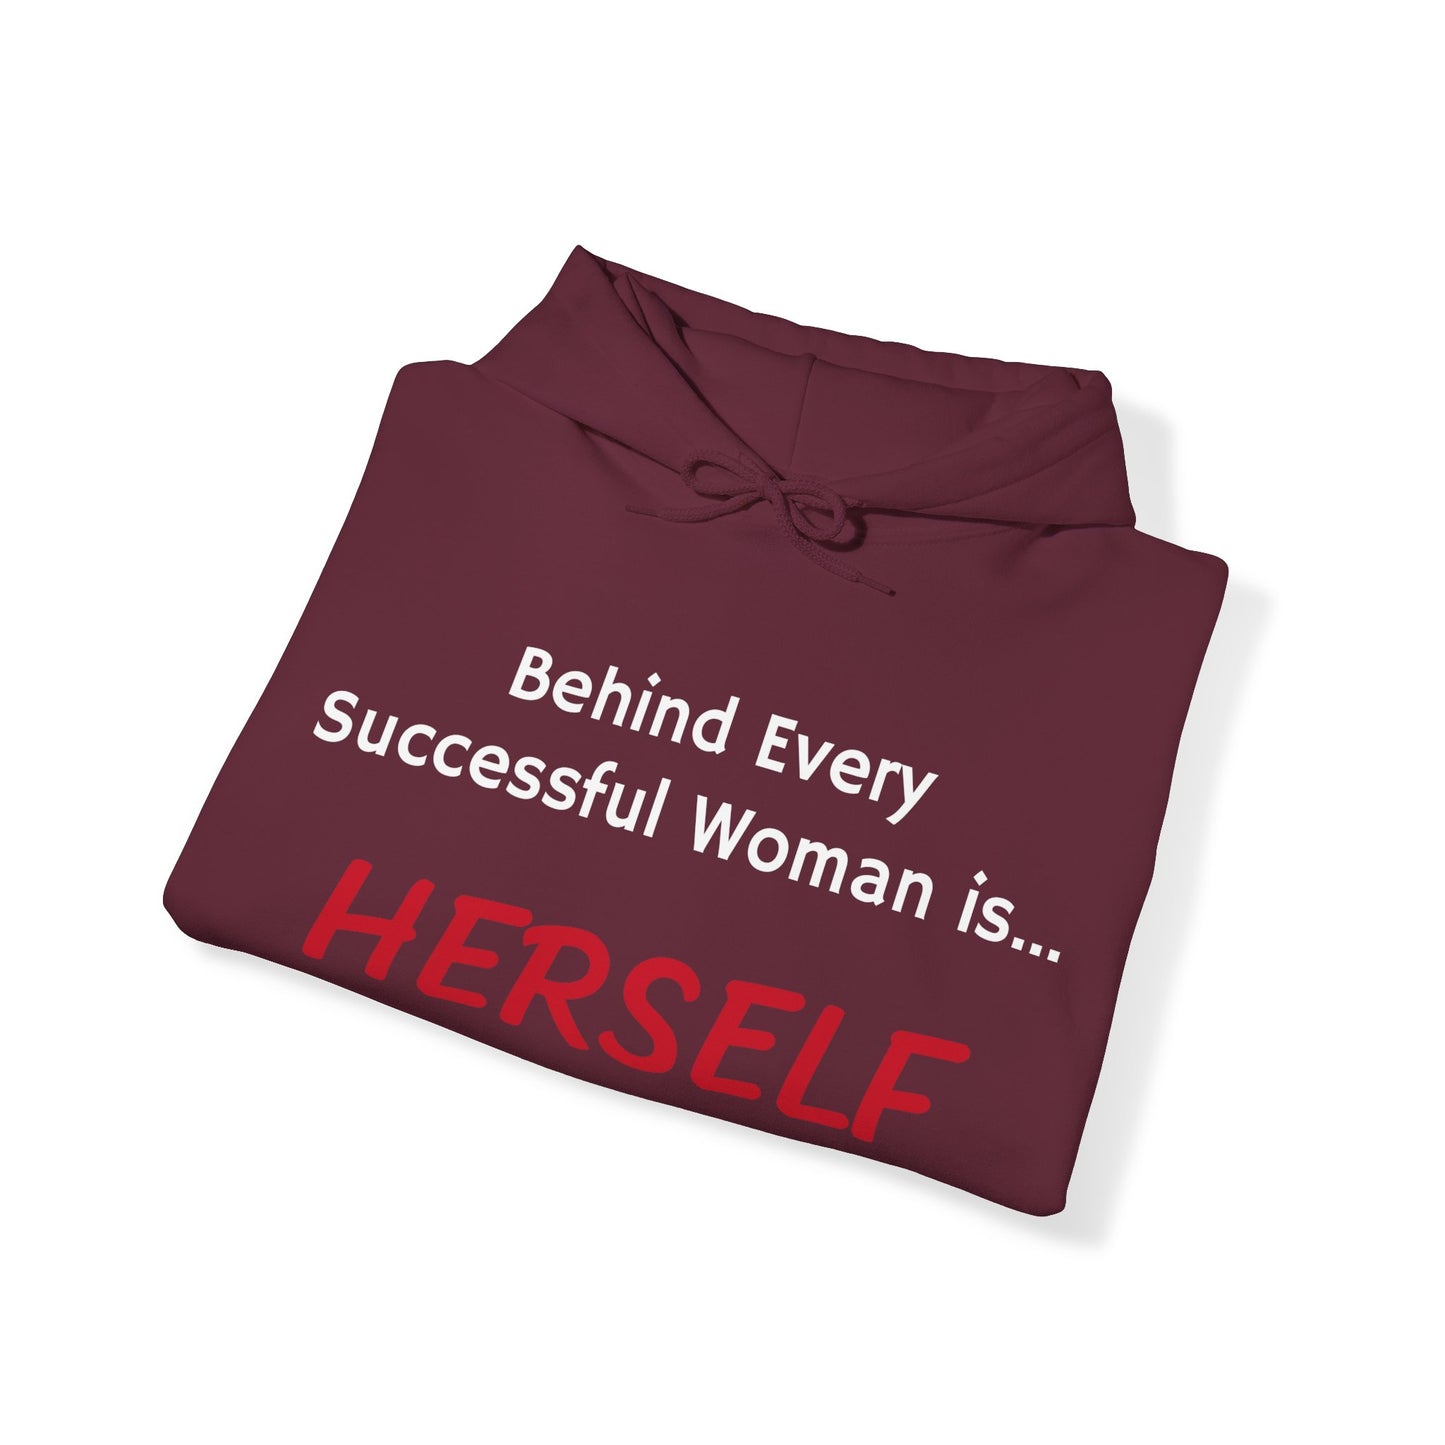 Successful woman Hooded Sweatshirt